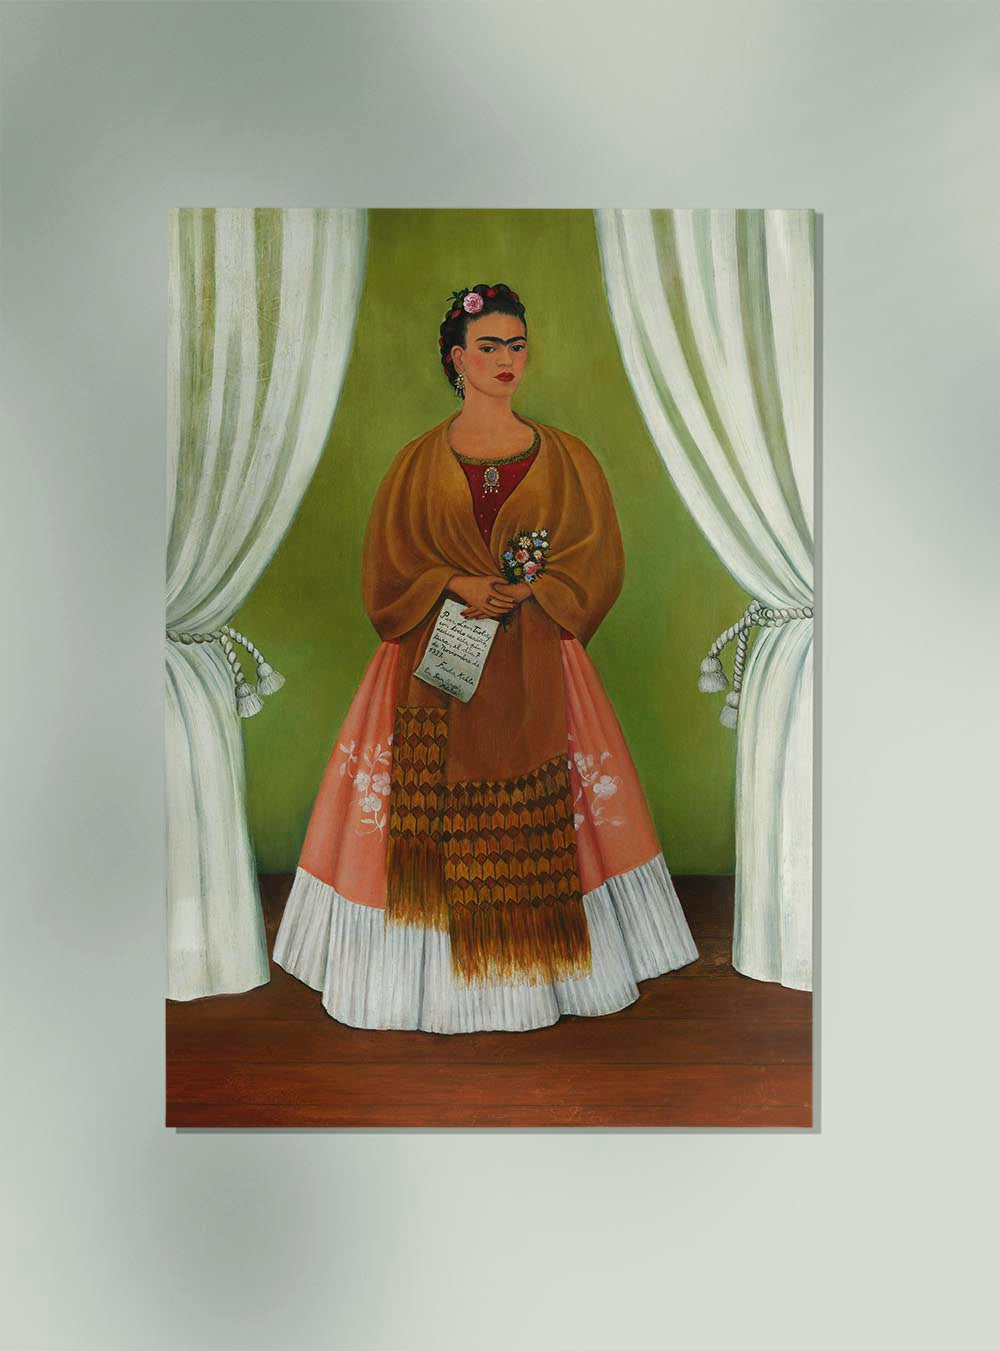 Self Portrait dedicated to Leon Trotsky Art Print by Frida Kahlo